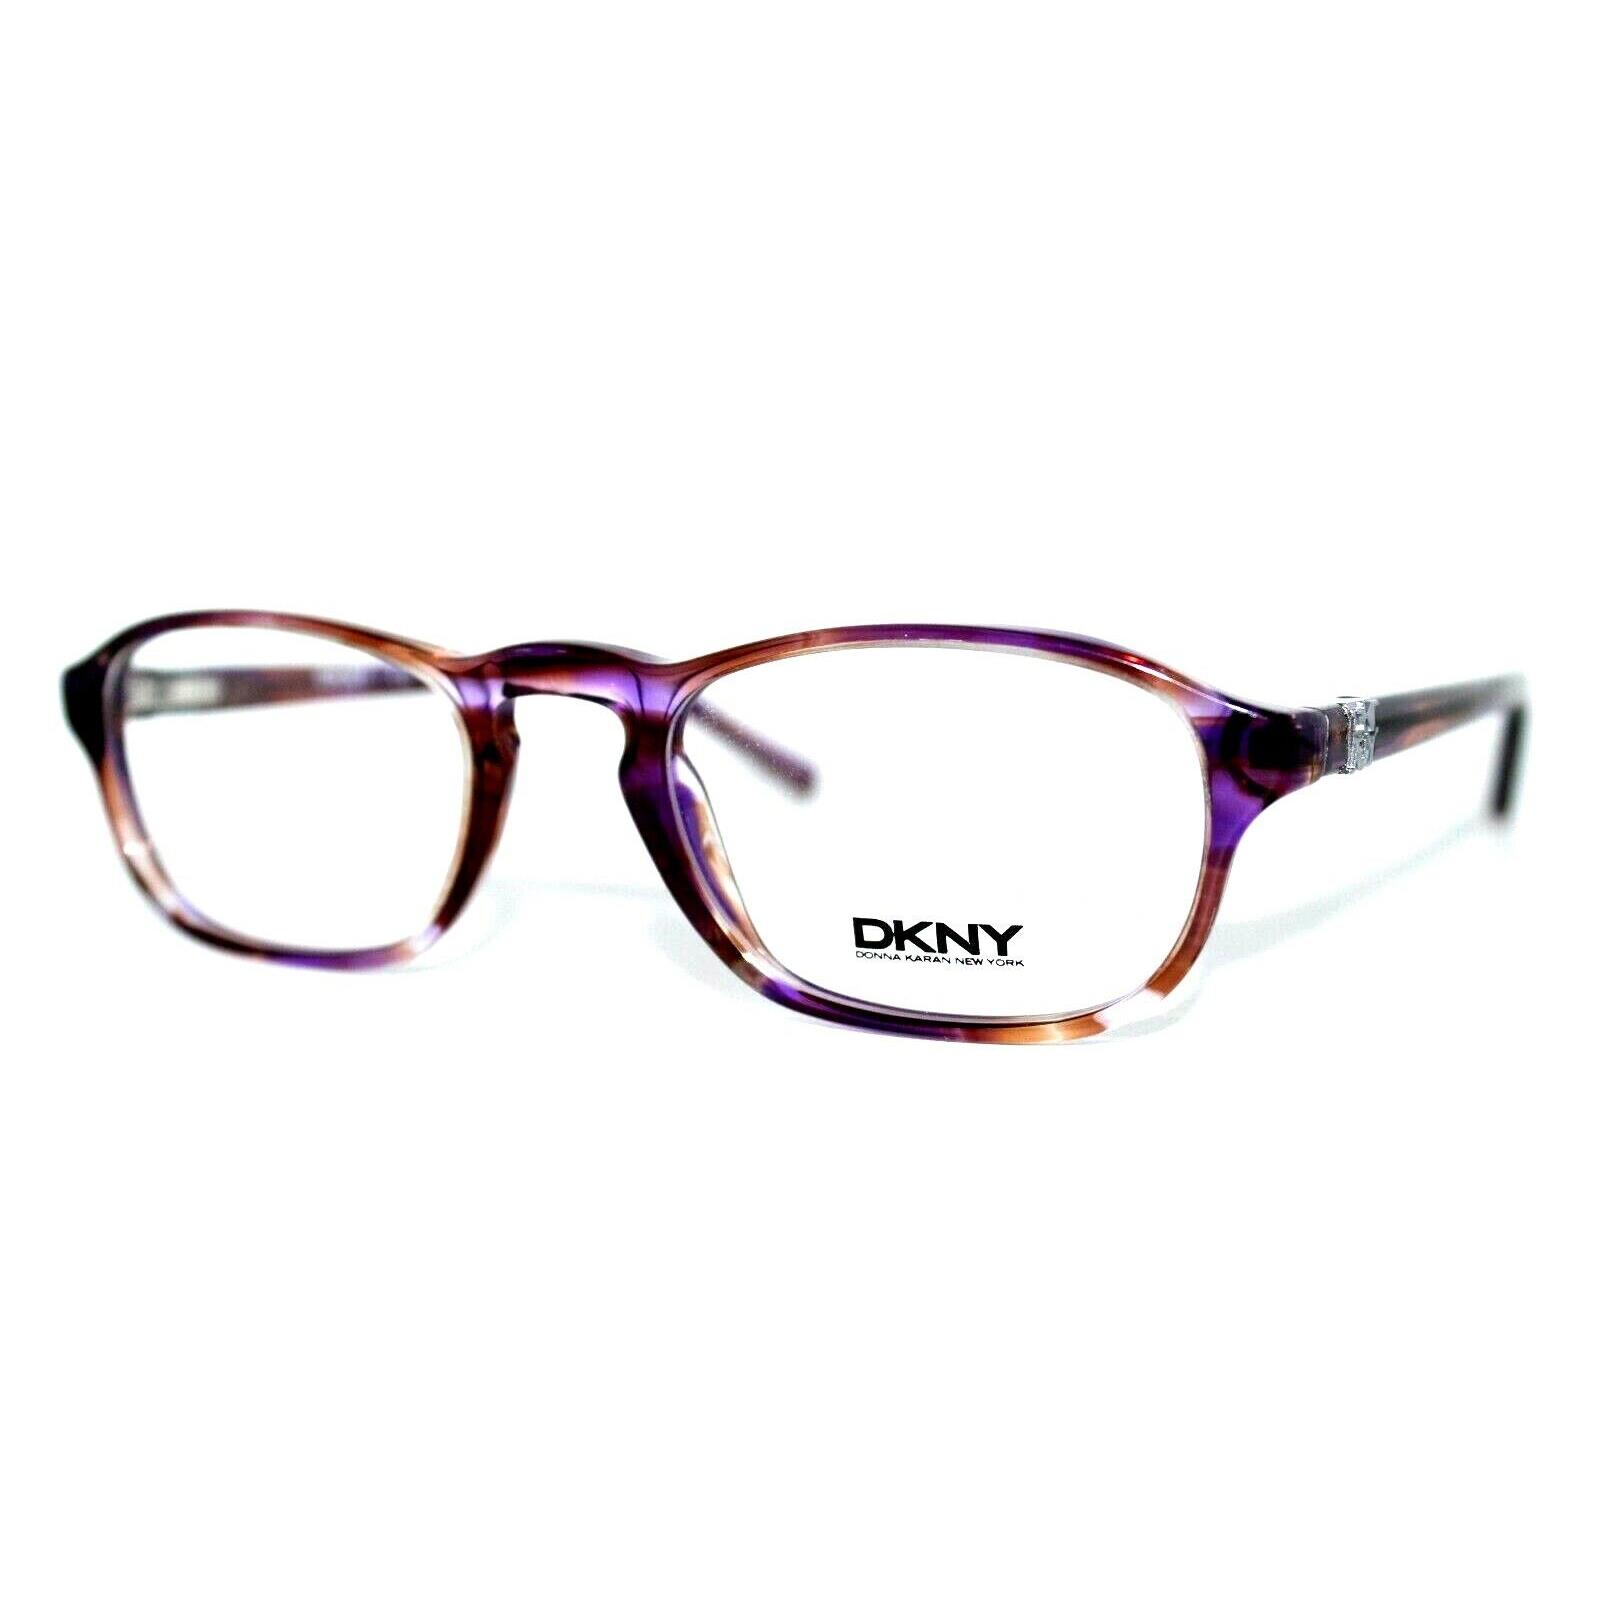 Dkny DY 4632 3593 Purple Eyeglasses Donna Karan Frames 50MM RX